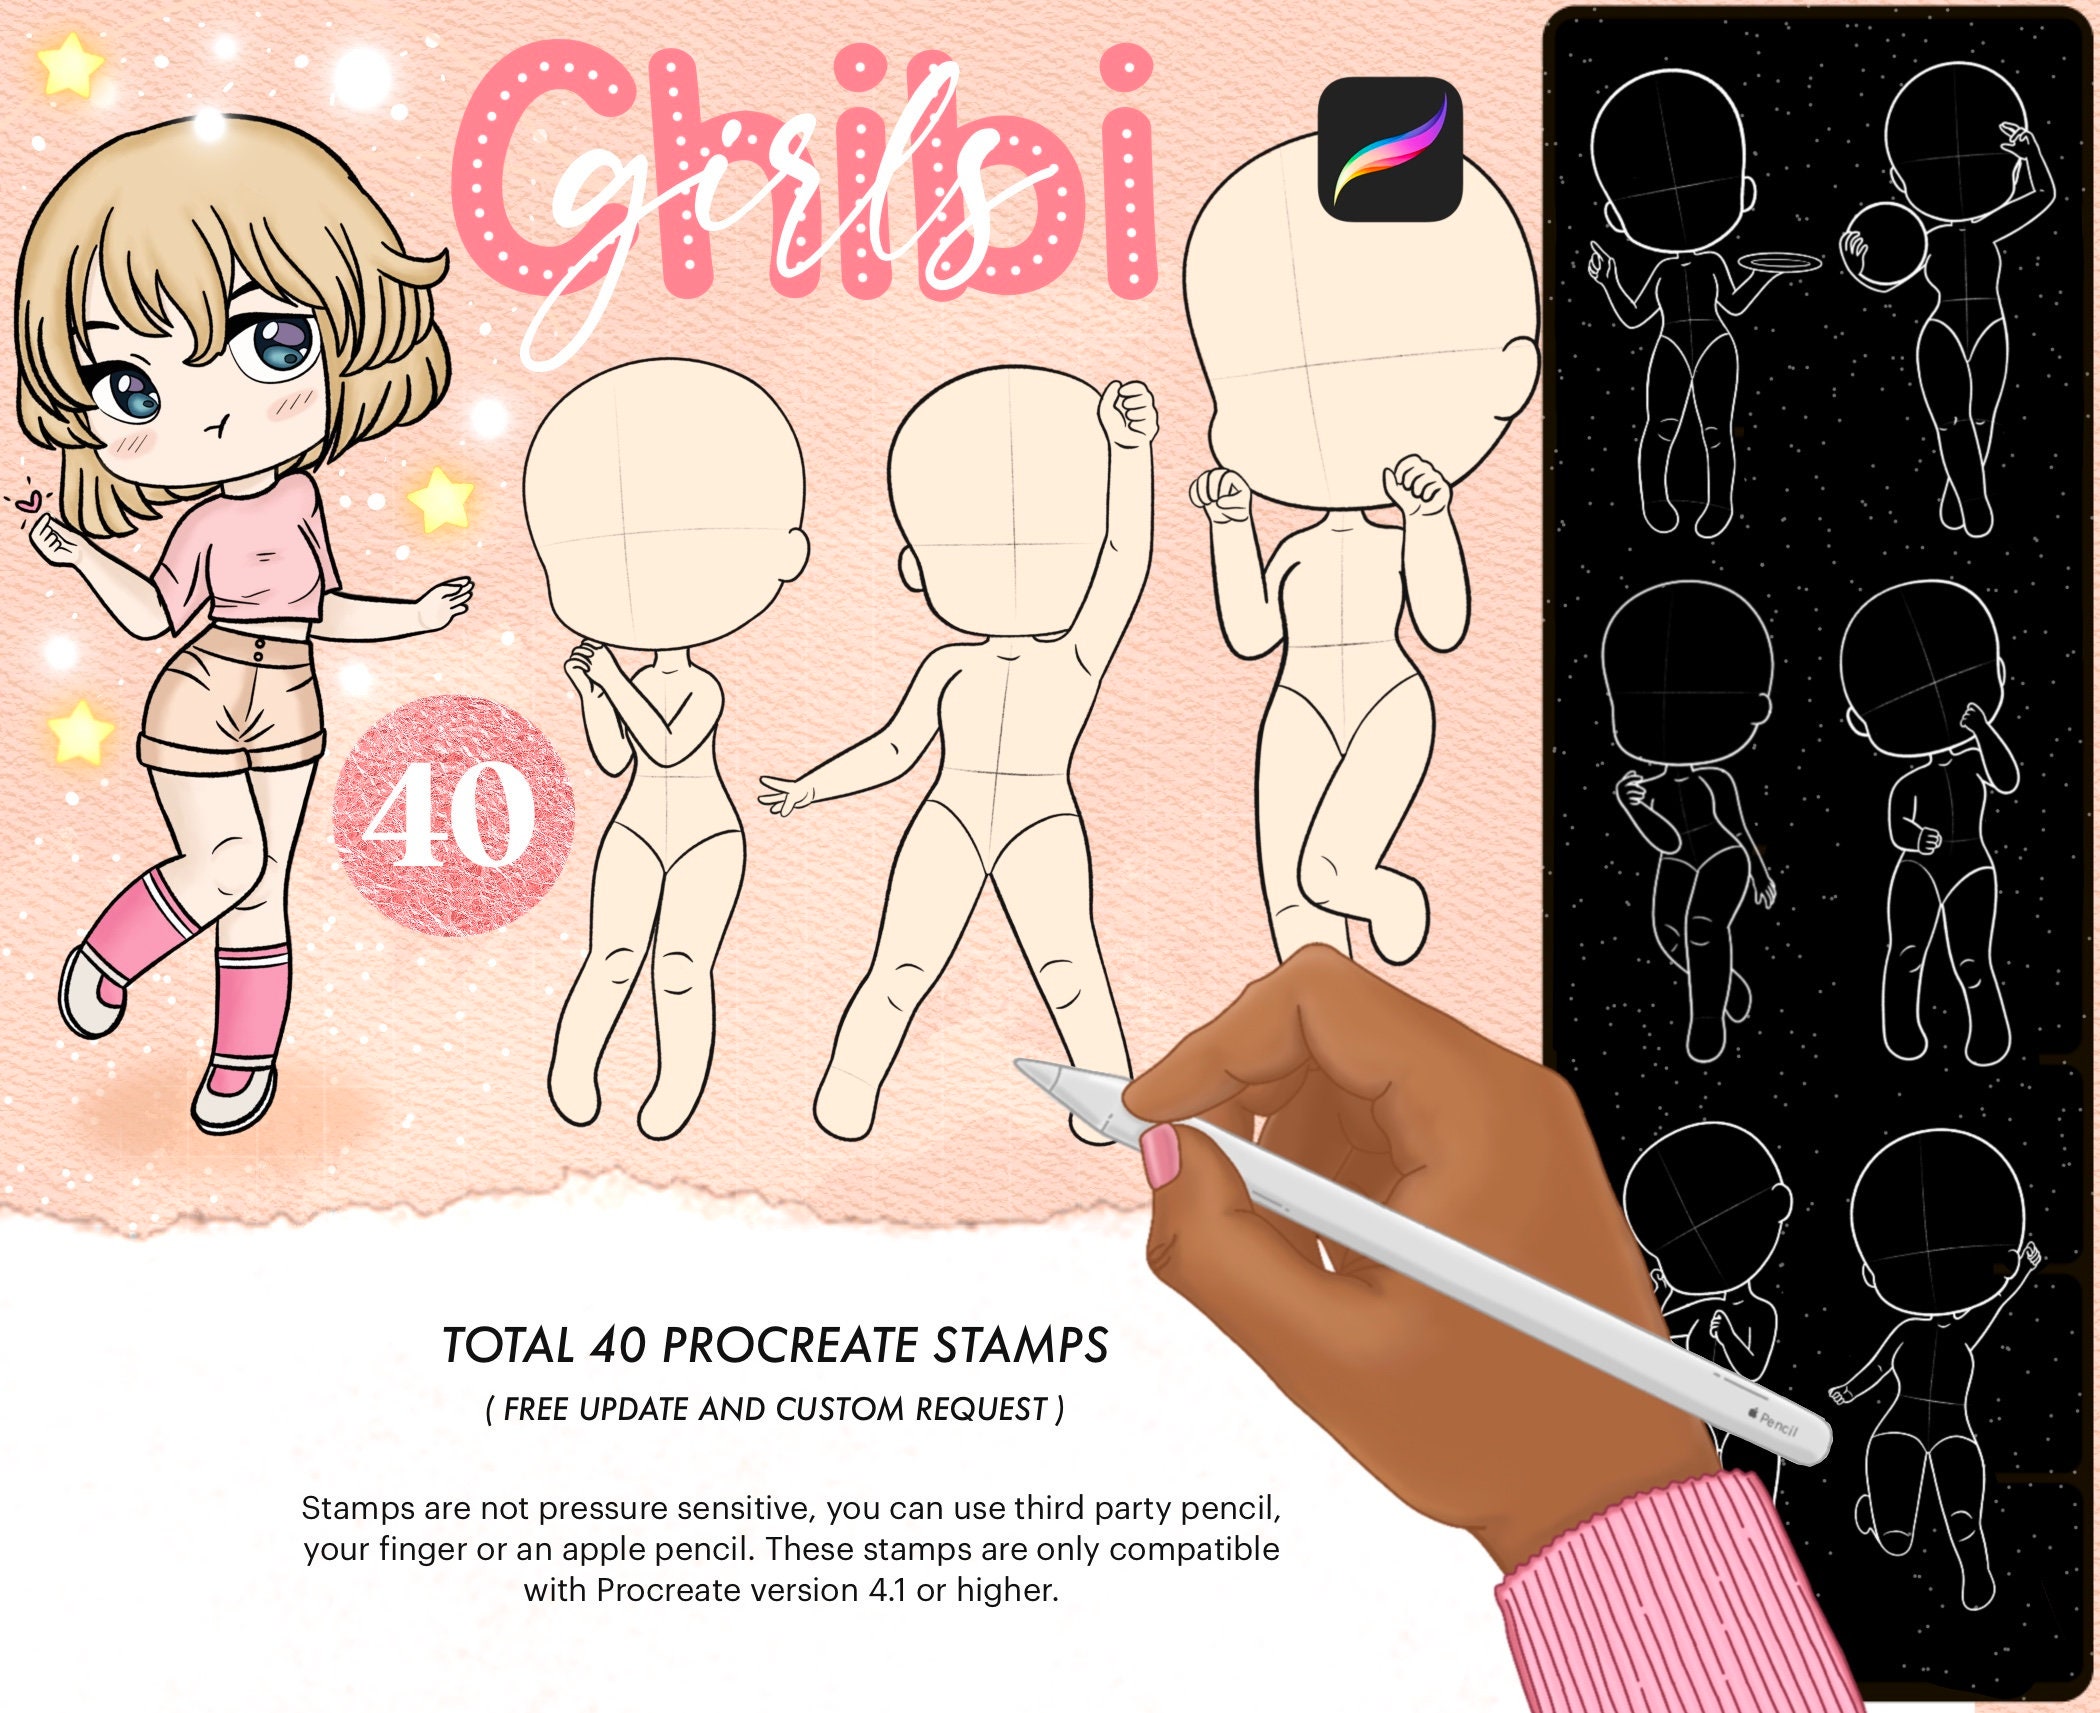 Pin by A L B U S on Chibii base  Anime poses reference, Chibi sketch,  Drawing base